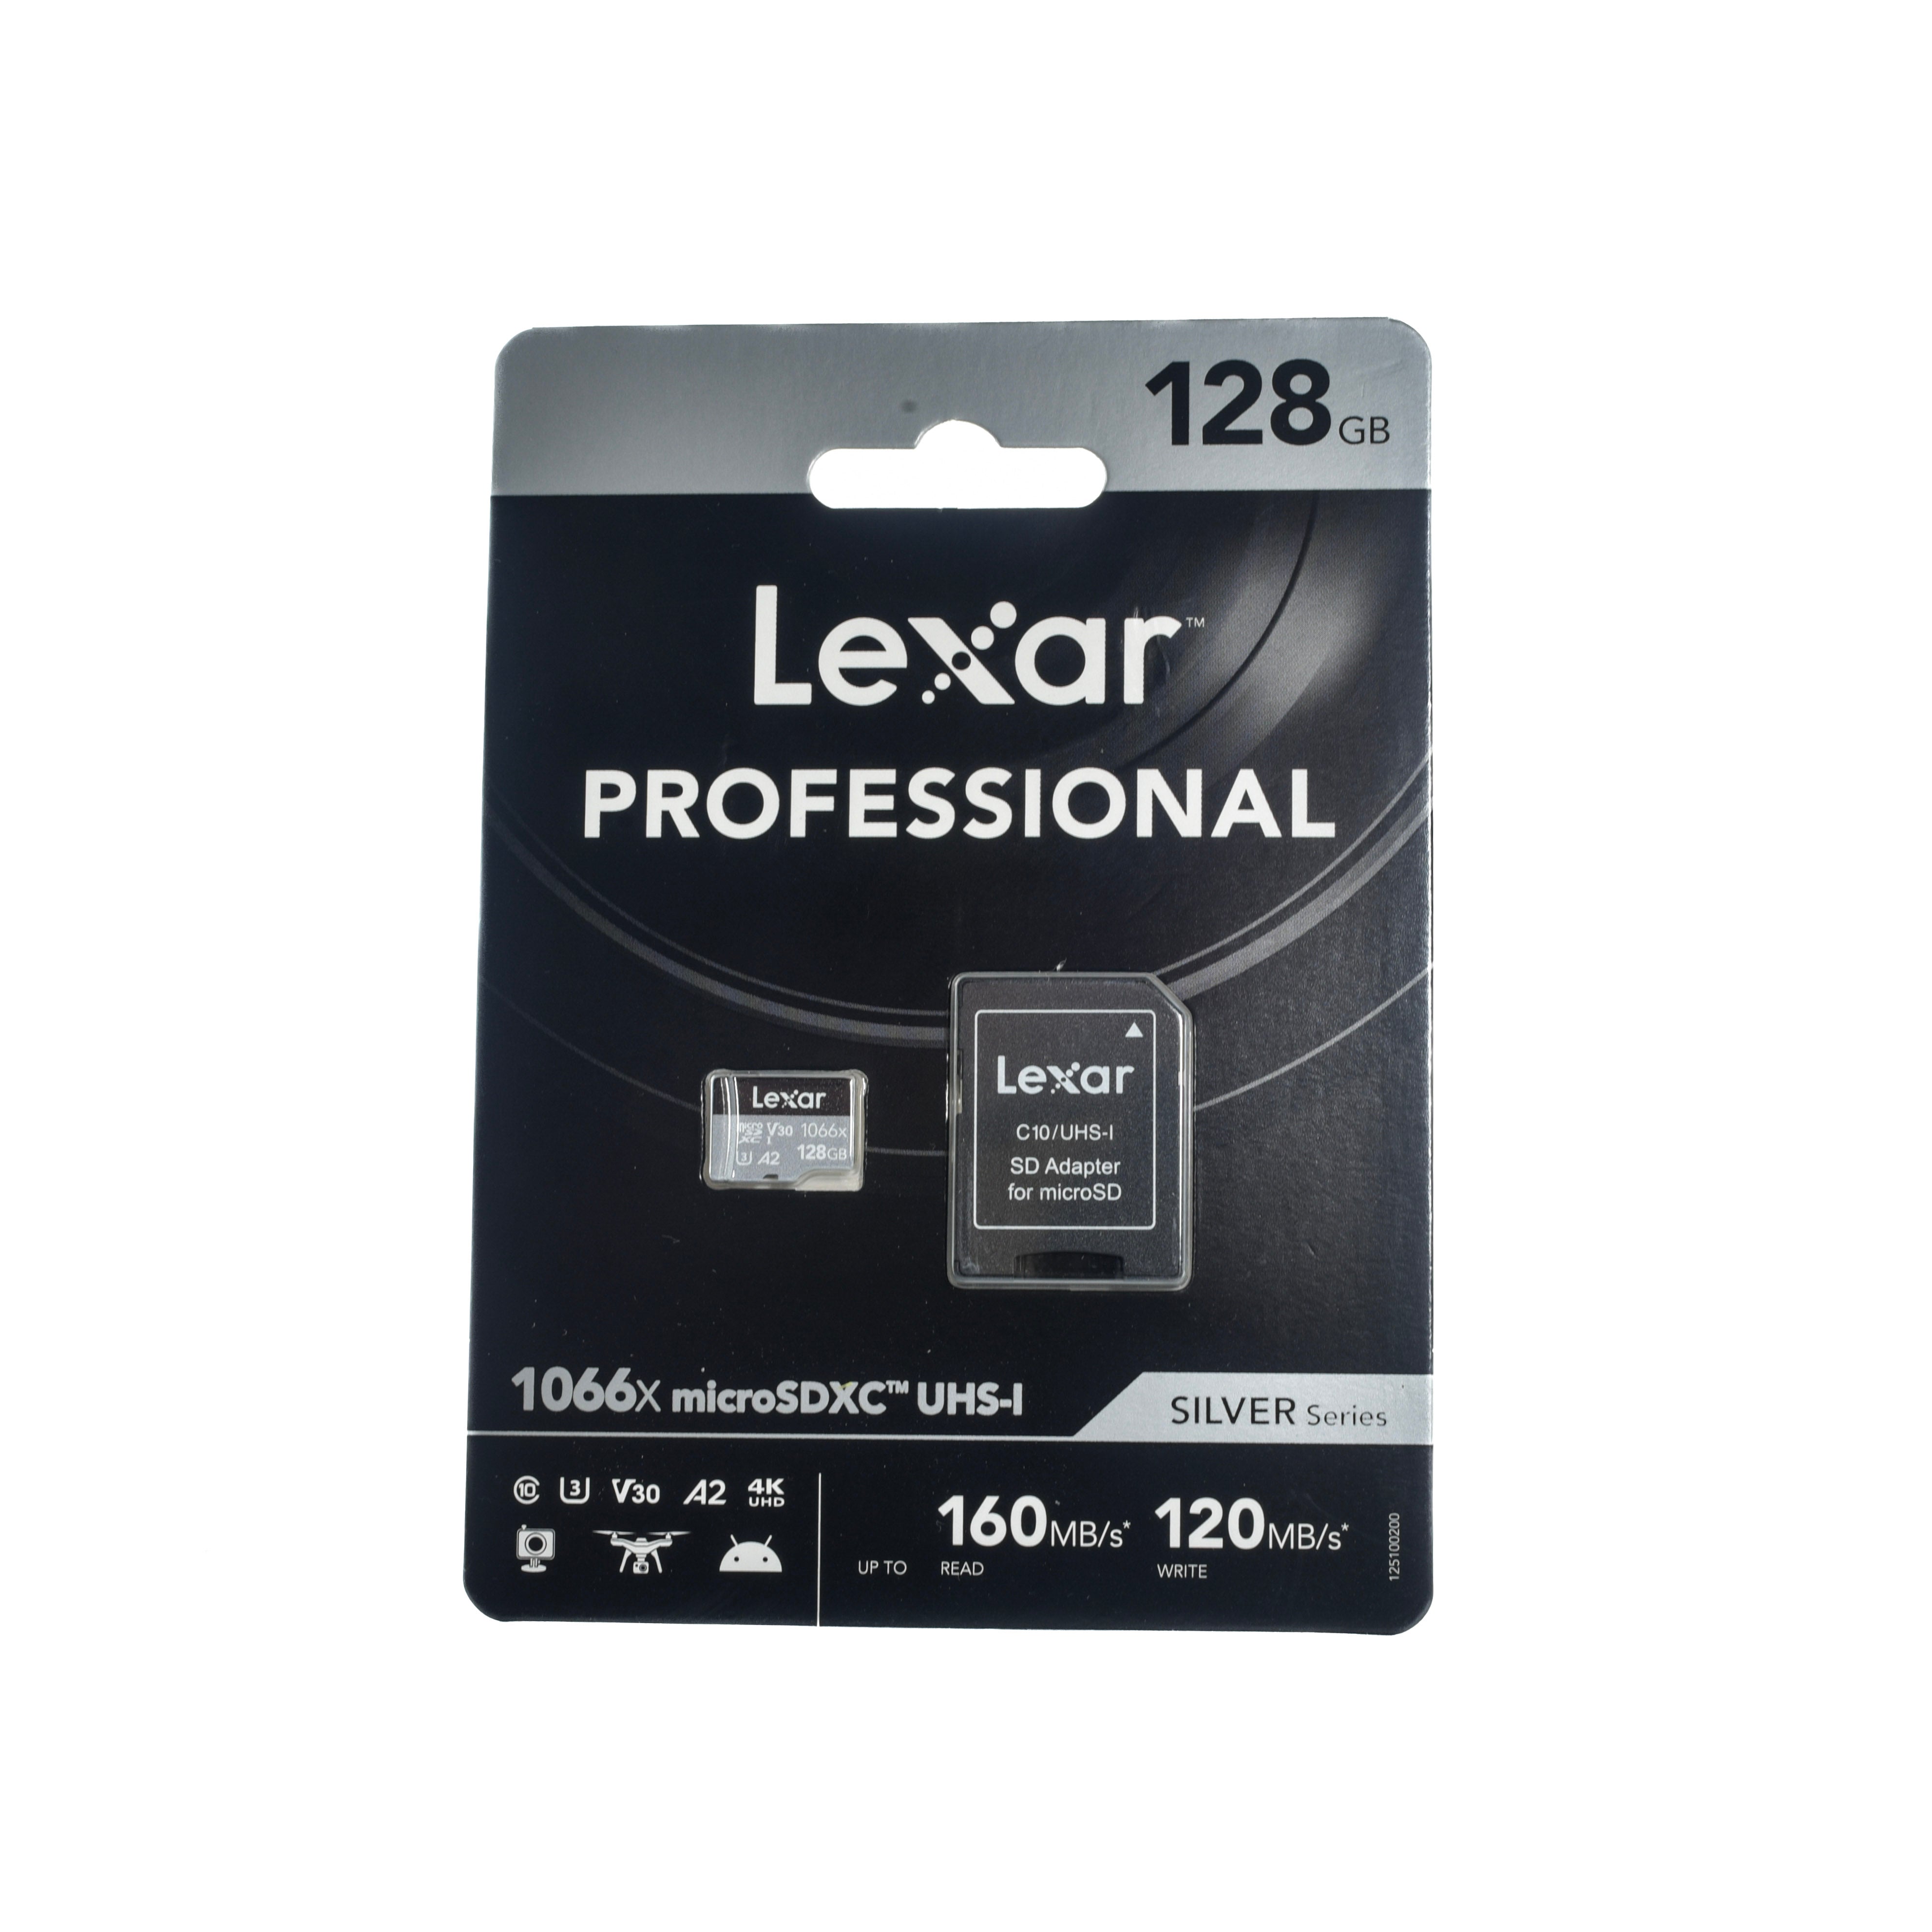 Lexar 128 GB Micro SDXC Card Professional UHS-1 (Silver Series)